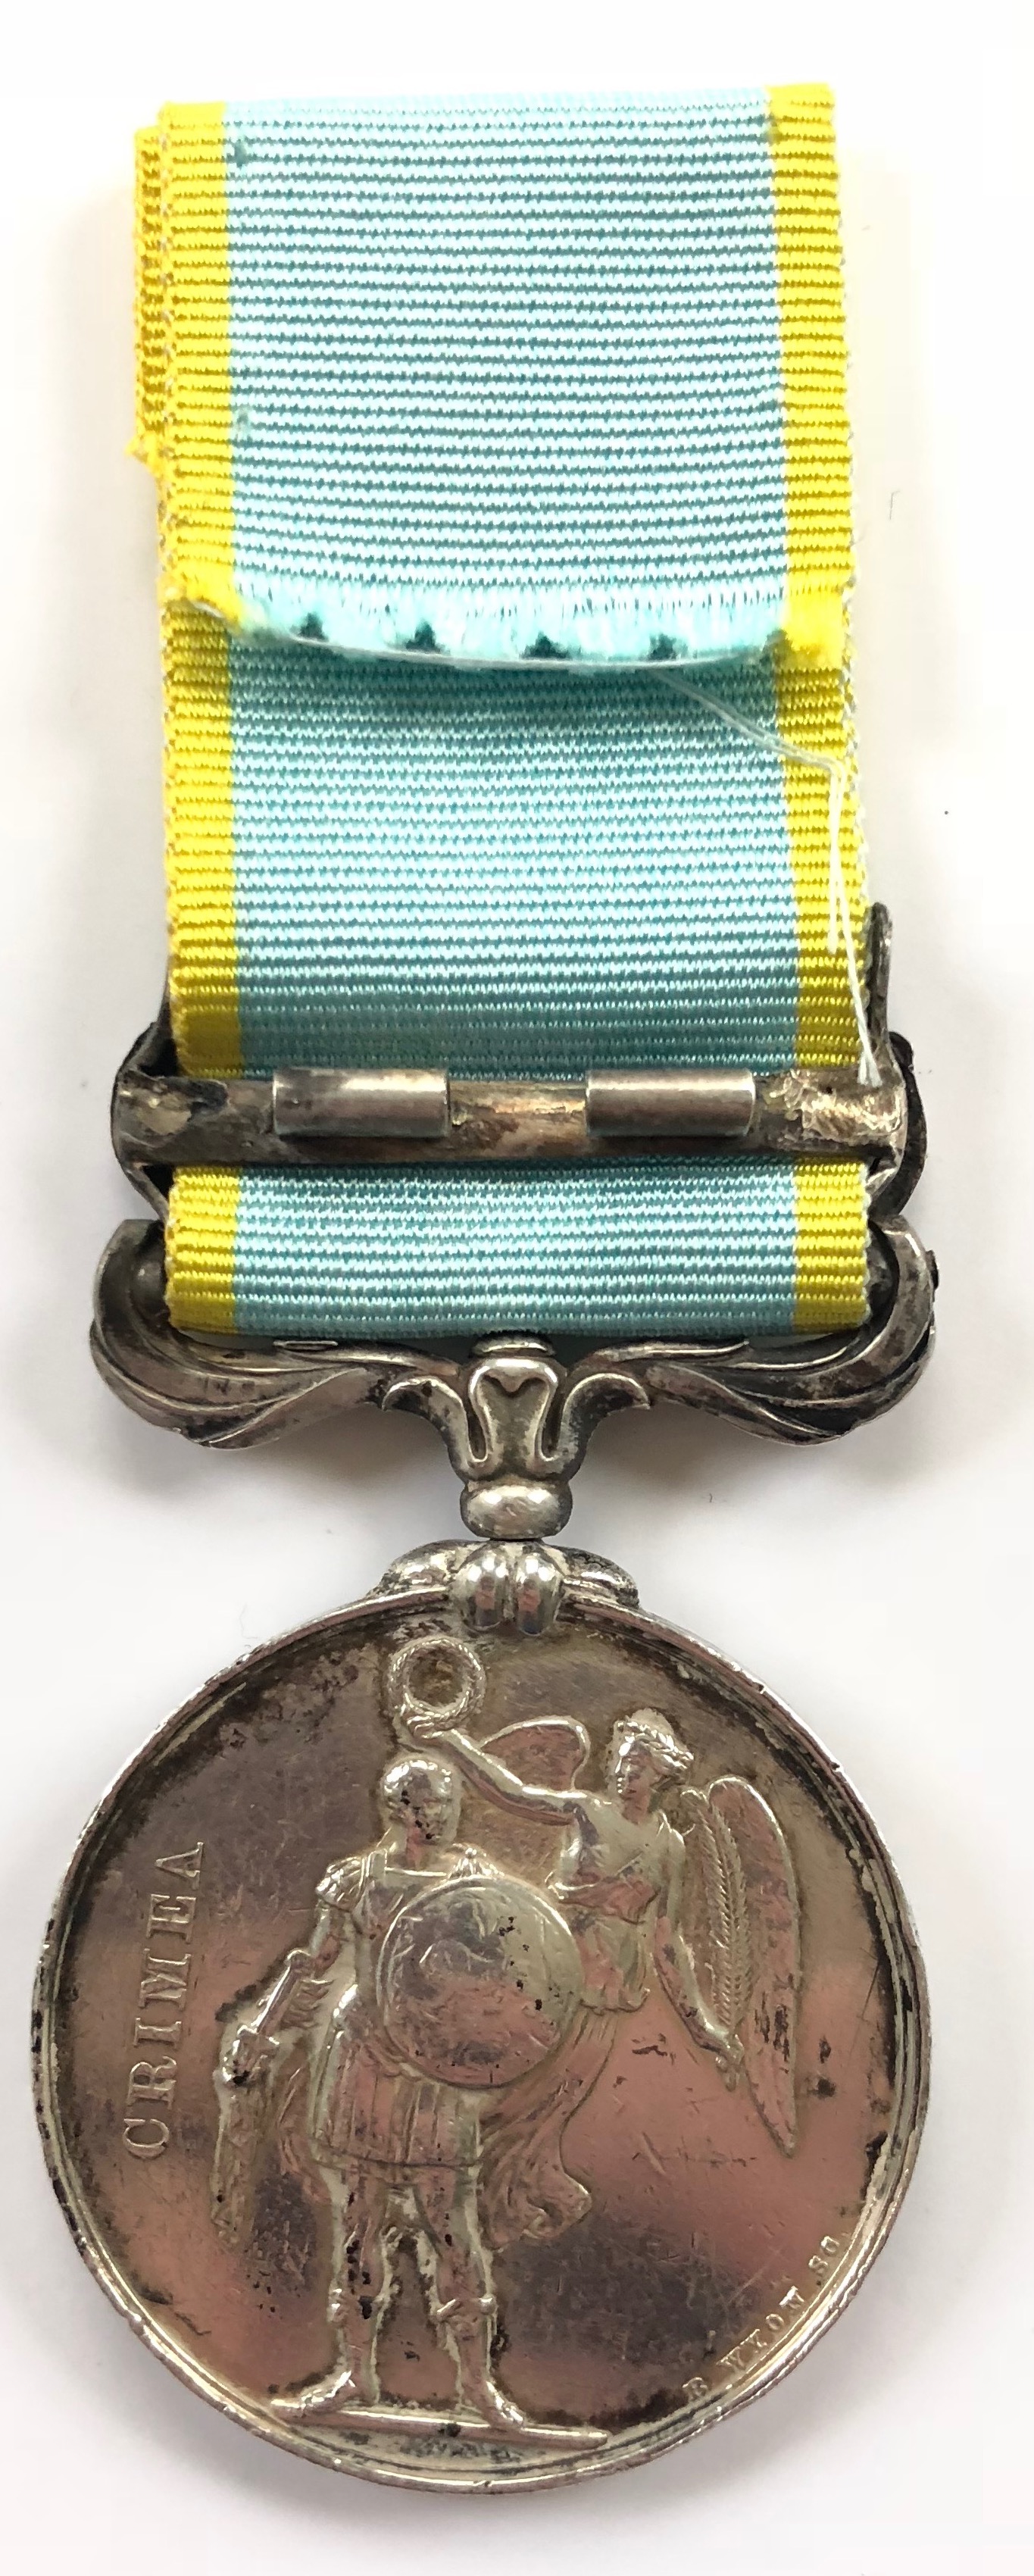 Crimea Medal, clasp “Sebastopol” - Image 2 of 2